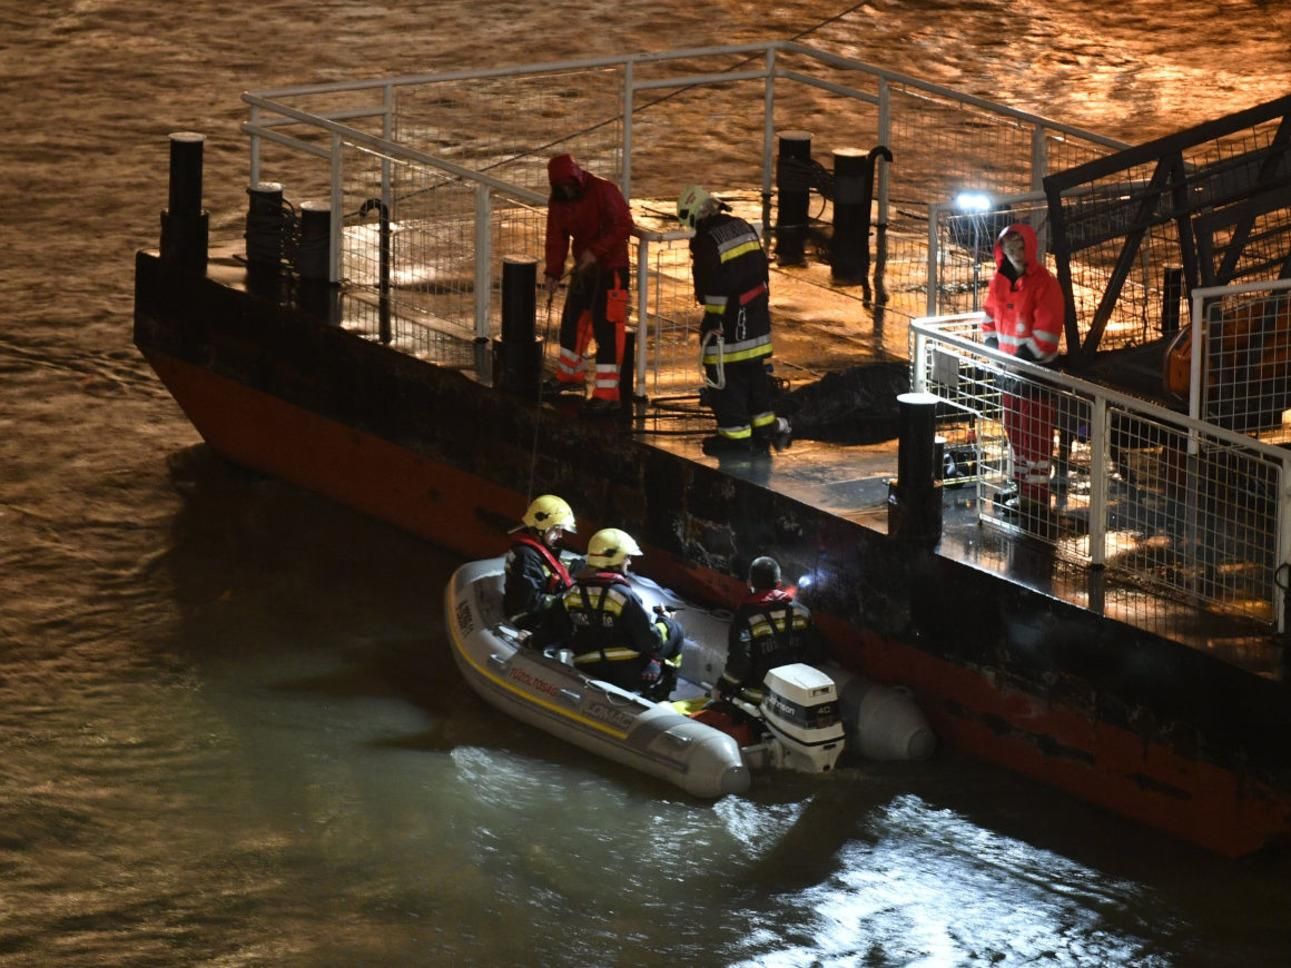 В Будапеште затонул катер с туристами - видео аварии судна 29 мая 2019